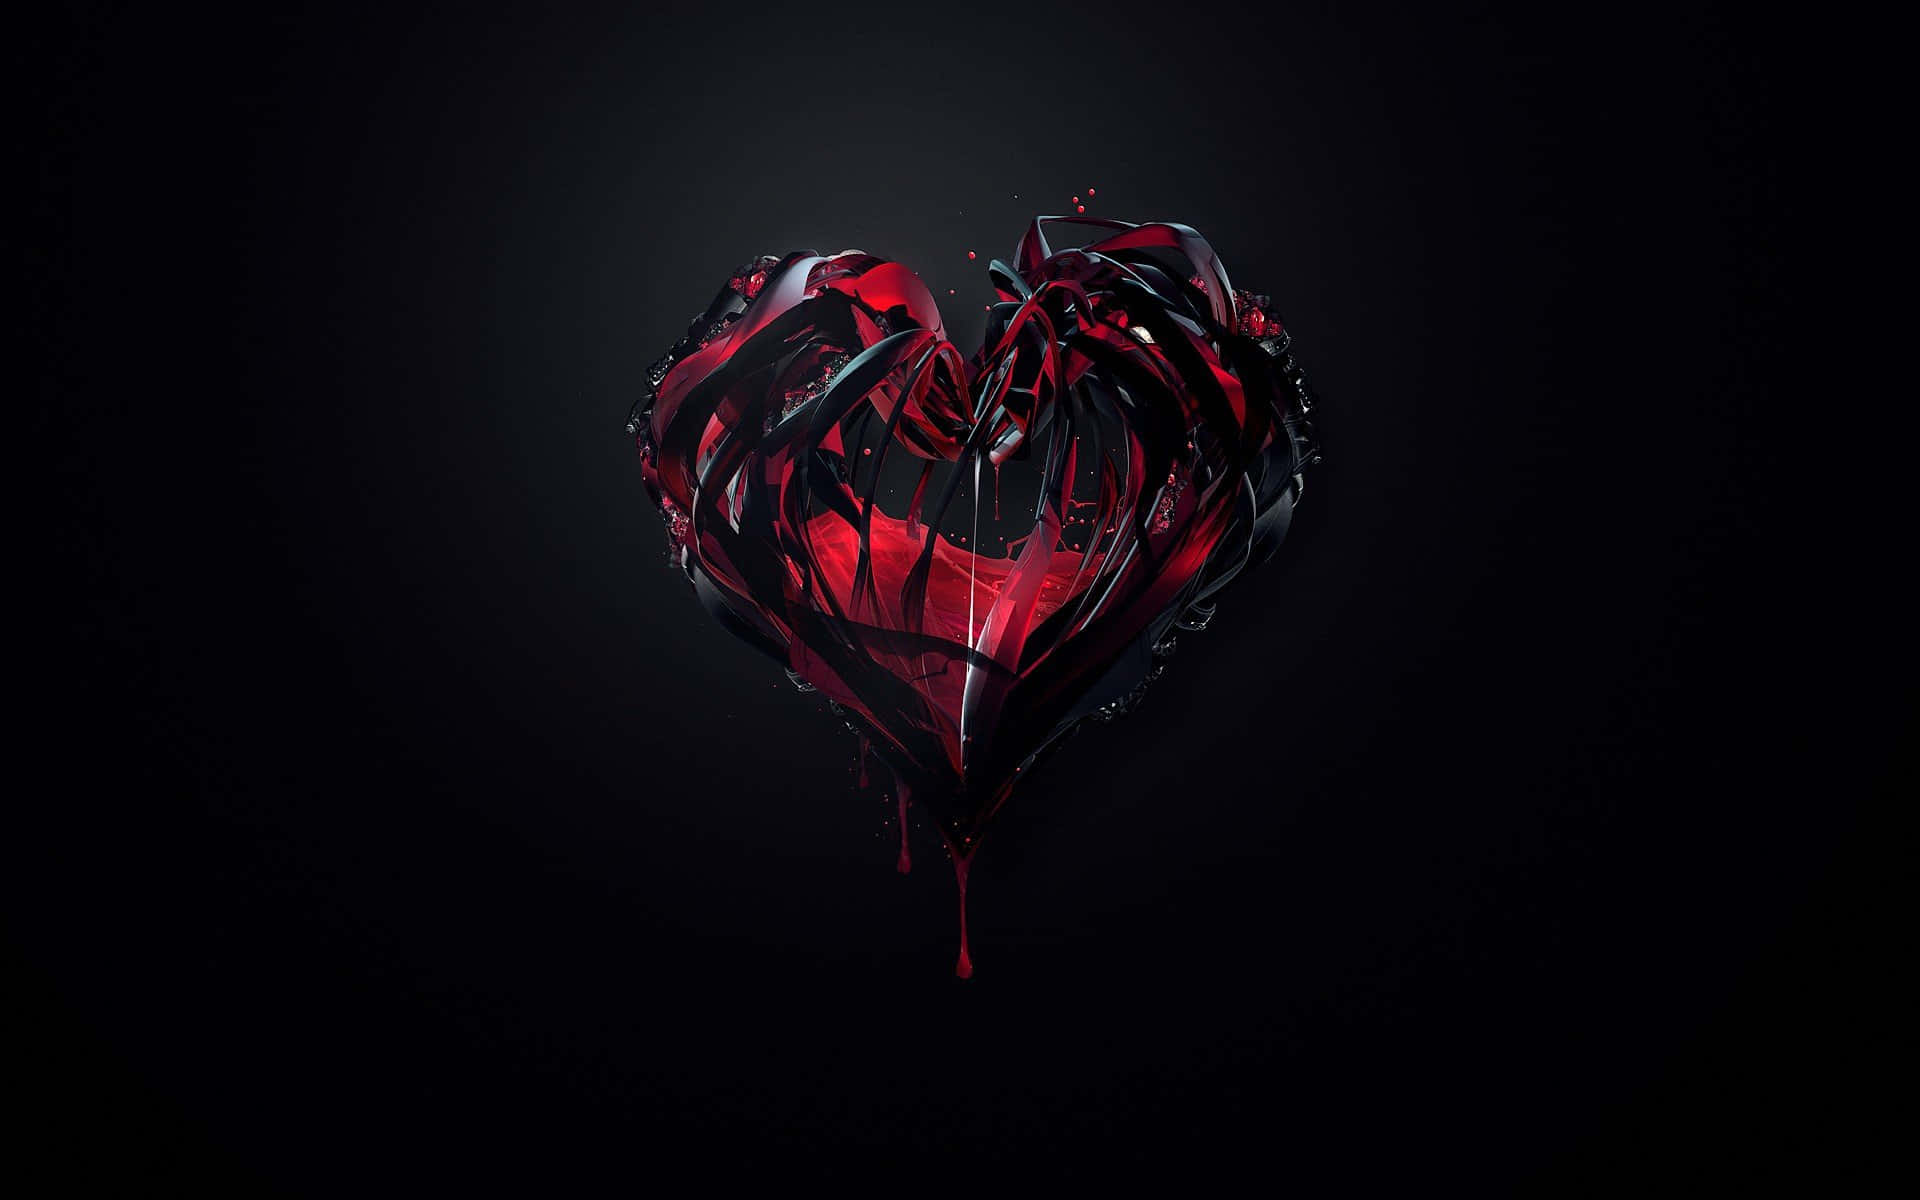 Ilustraciónen 3d De Un Corazón Rojo Fondo de pantalla